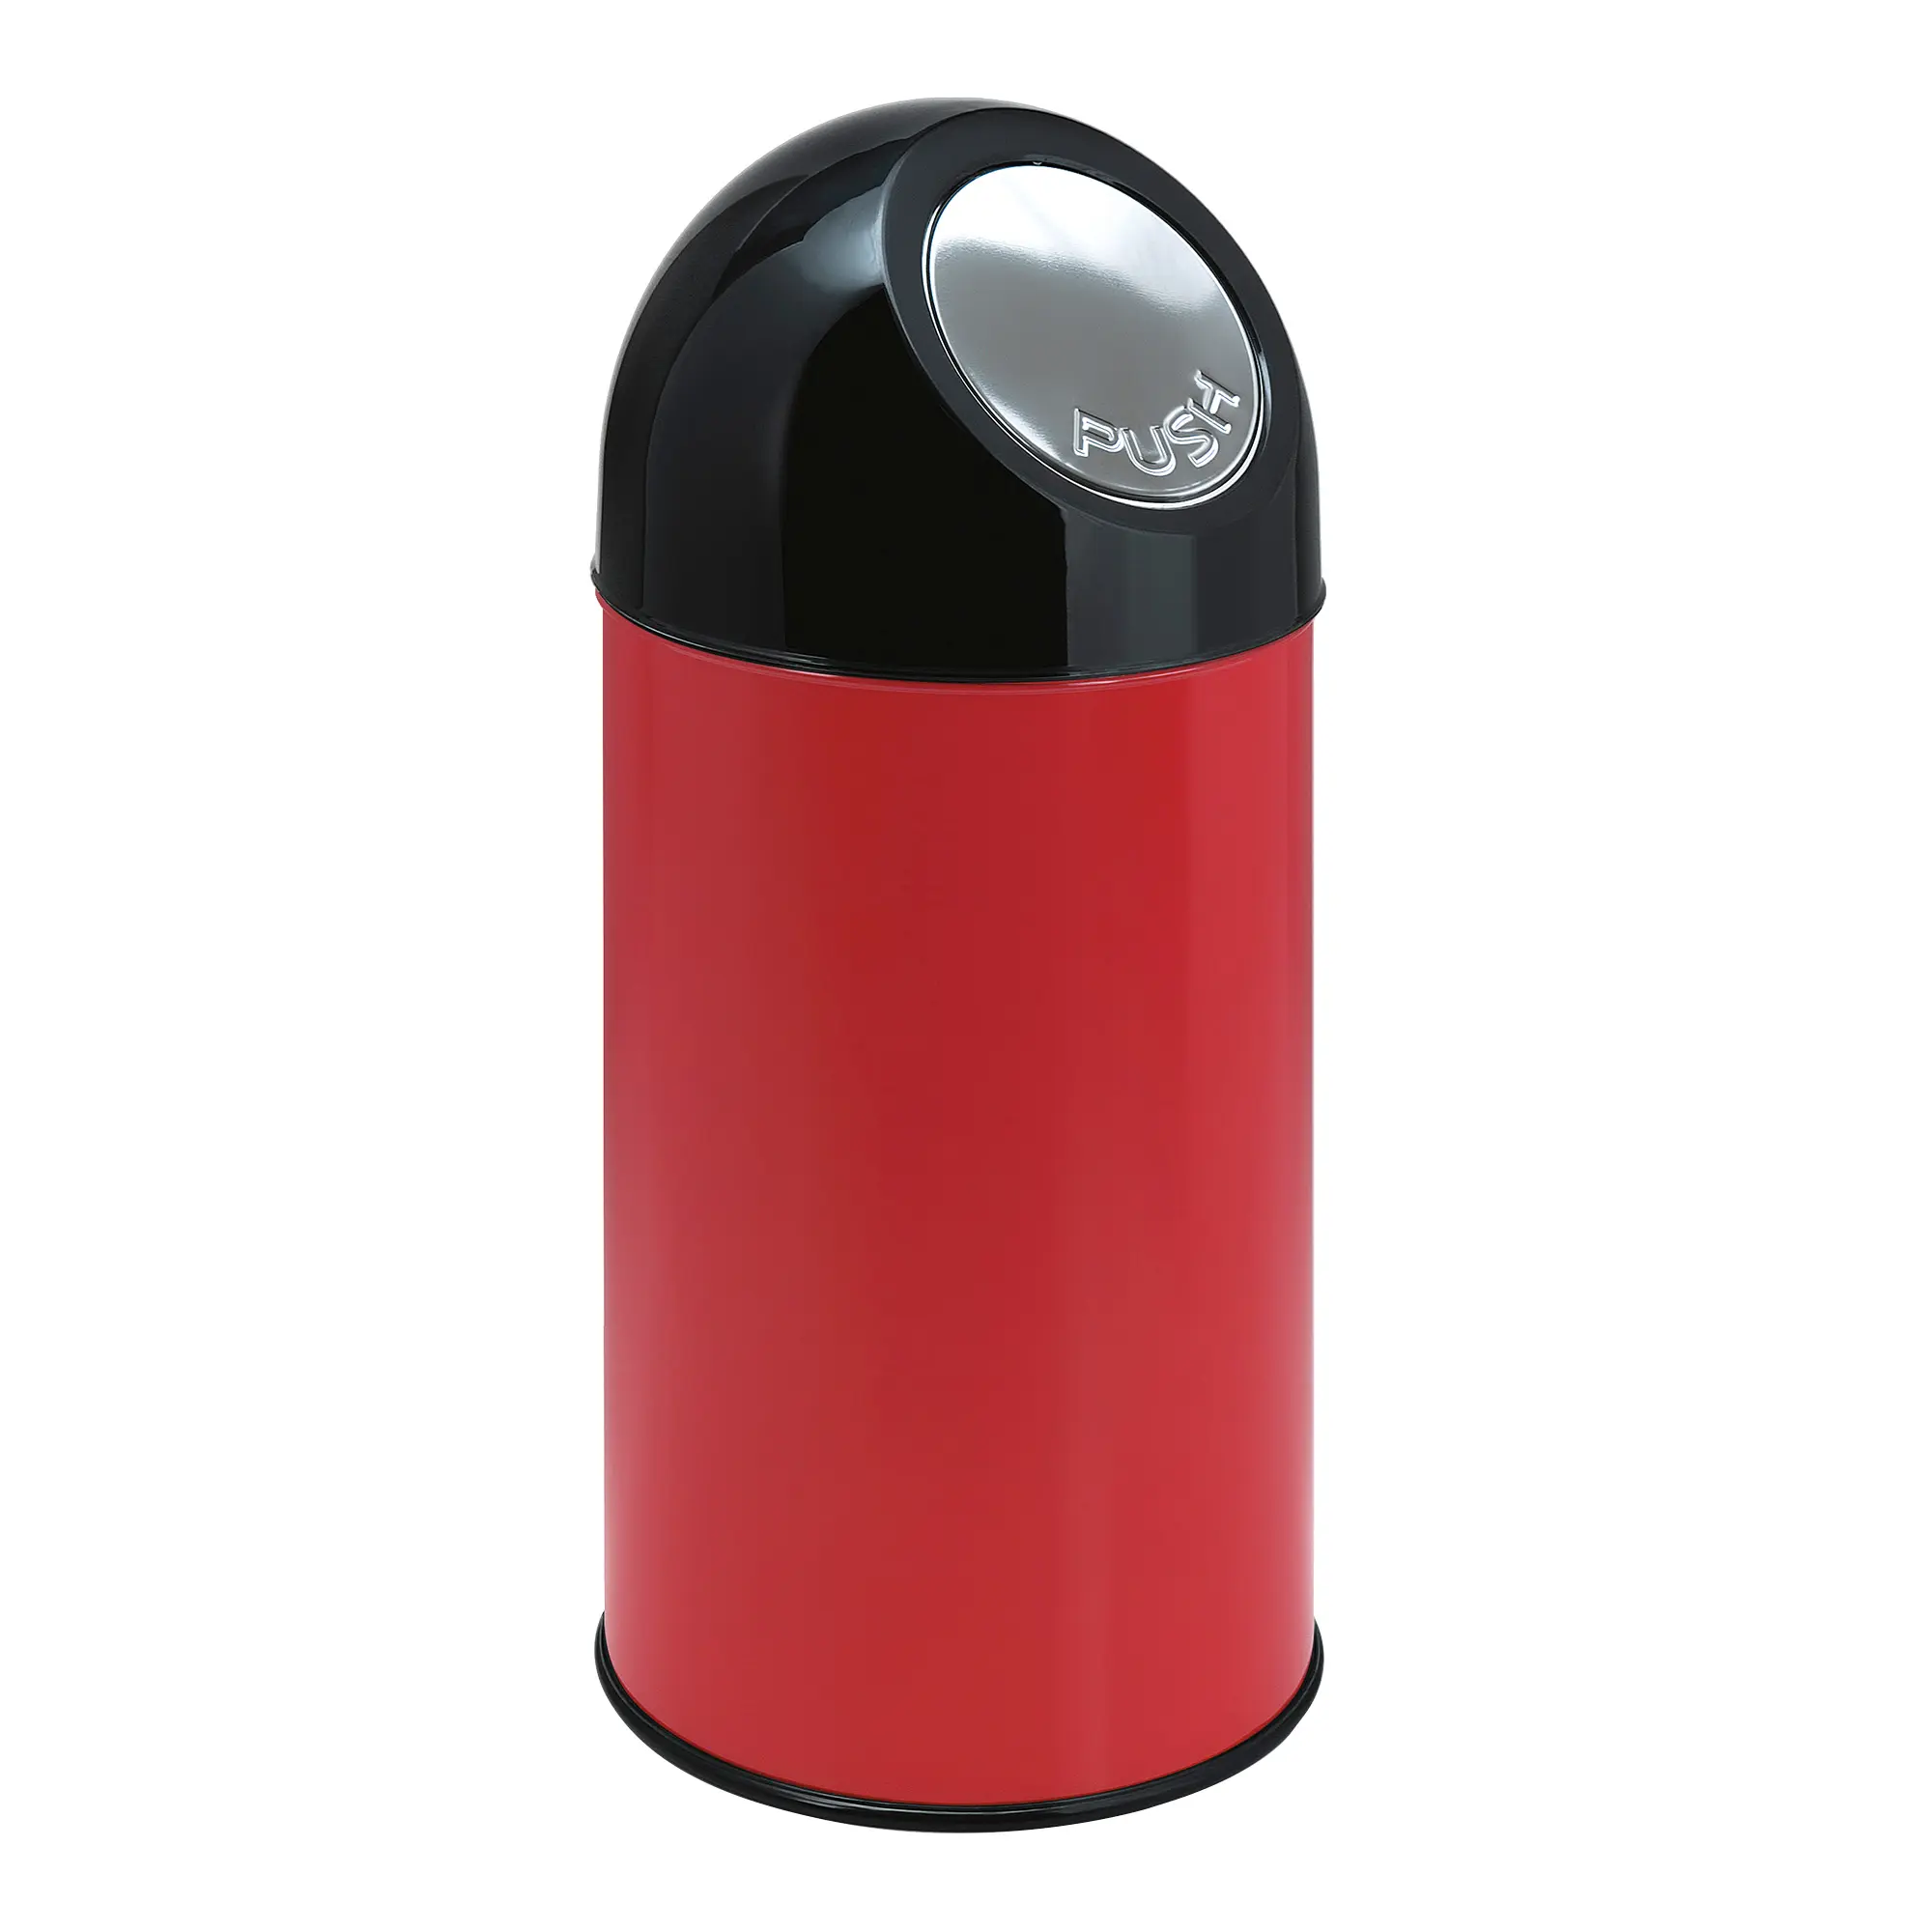 V-Part Abfallbehälter Edelstahl-Pushklappe 40 Liter rot/schwarz 31034857_1